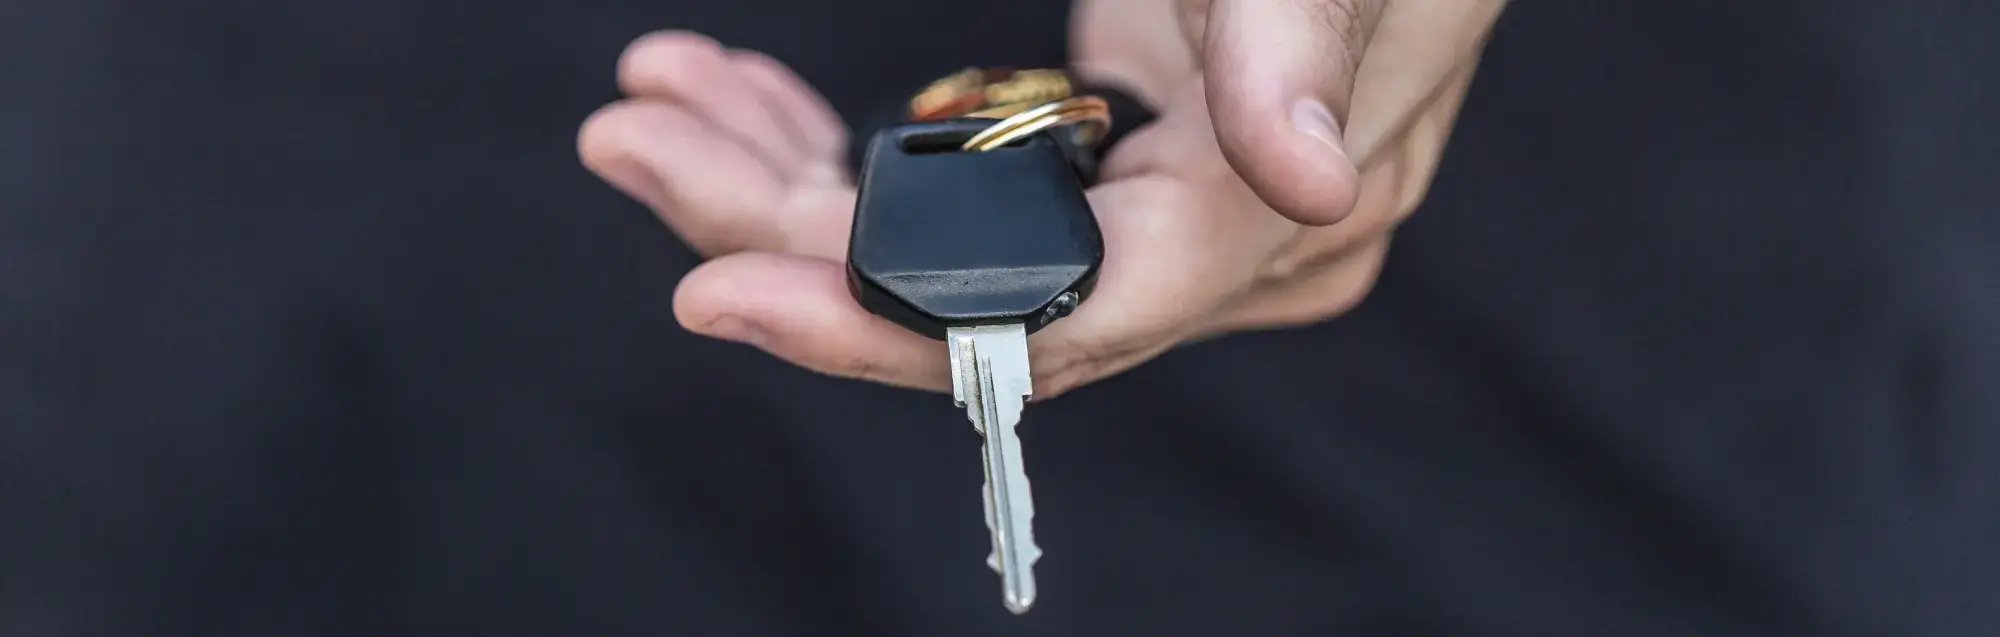 Person holding car keys